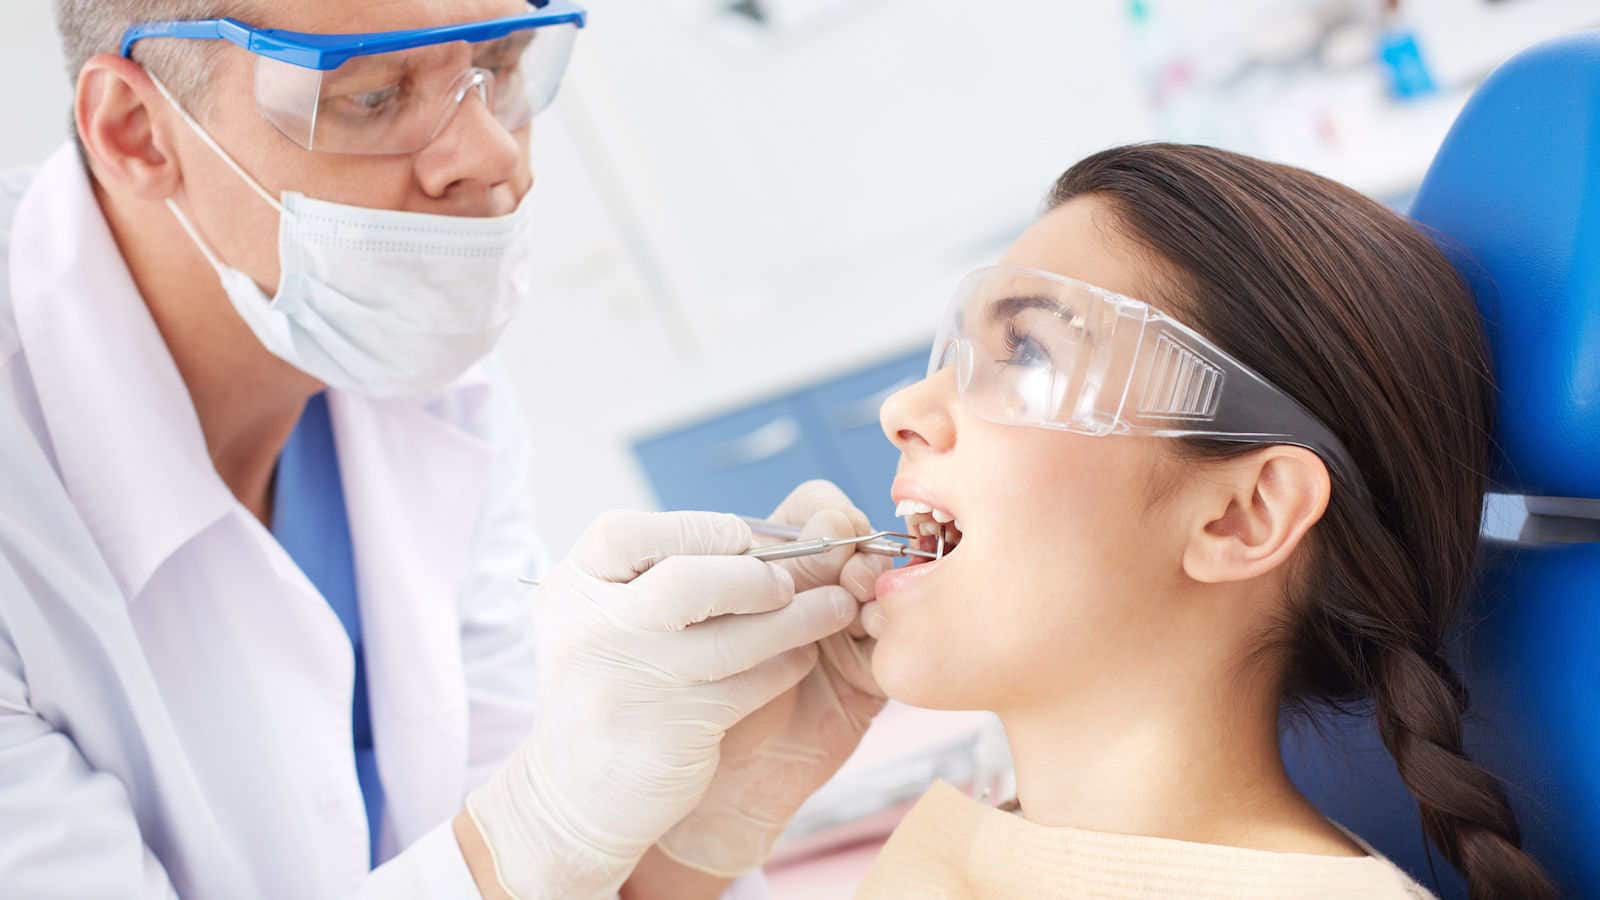 North Arlington Dental Care and Orthodontics